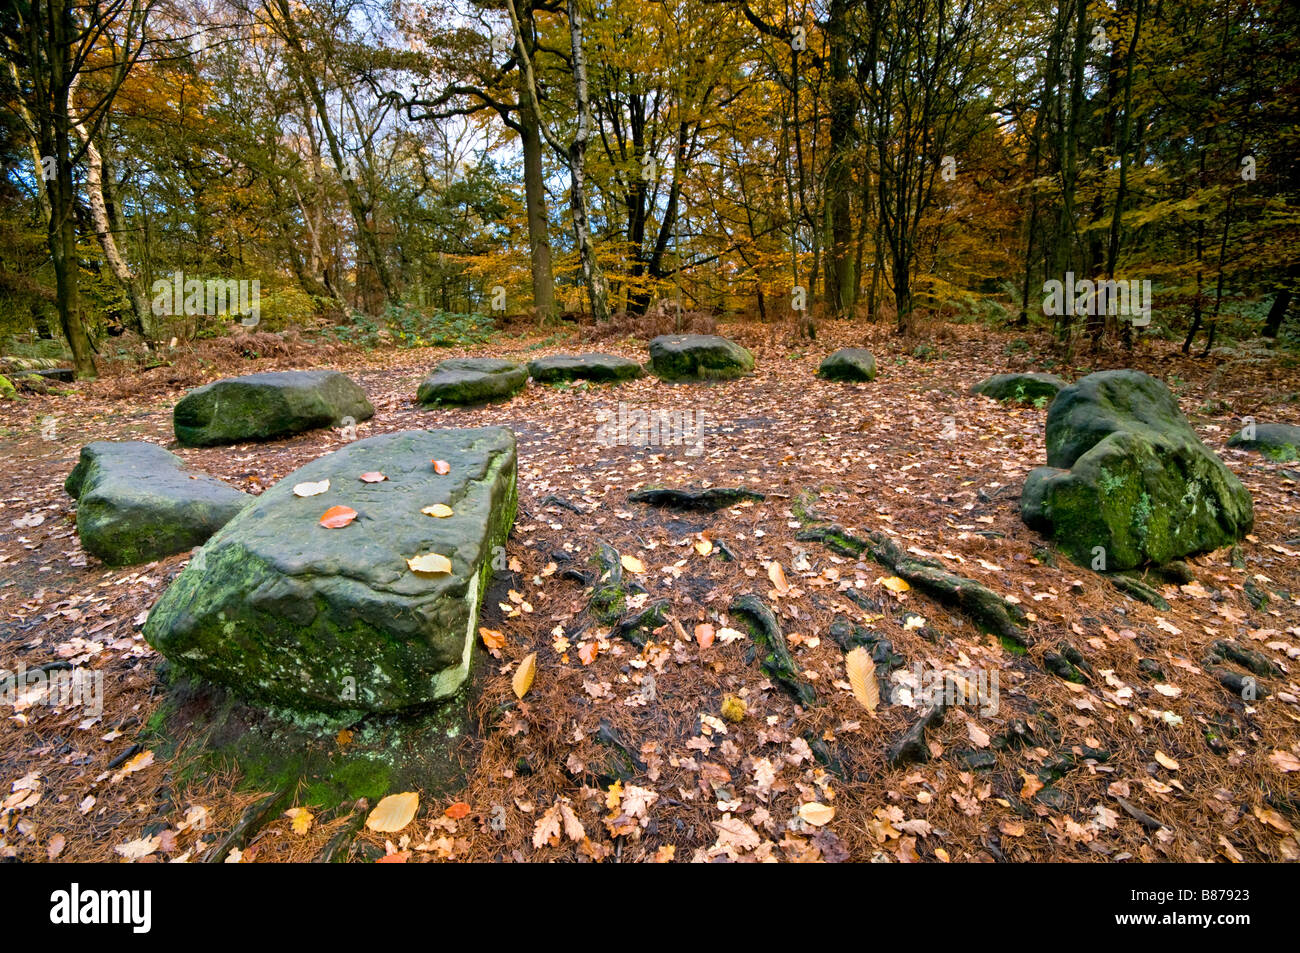 The Druids Stone Circle in Autumn on The Edge, Alderley Edge, Cheshire, England, UK Stock Photo